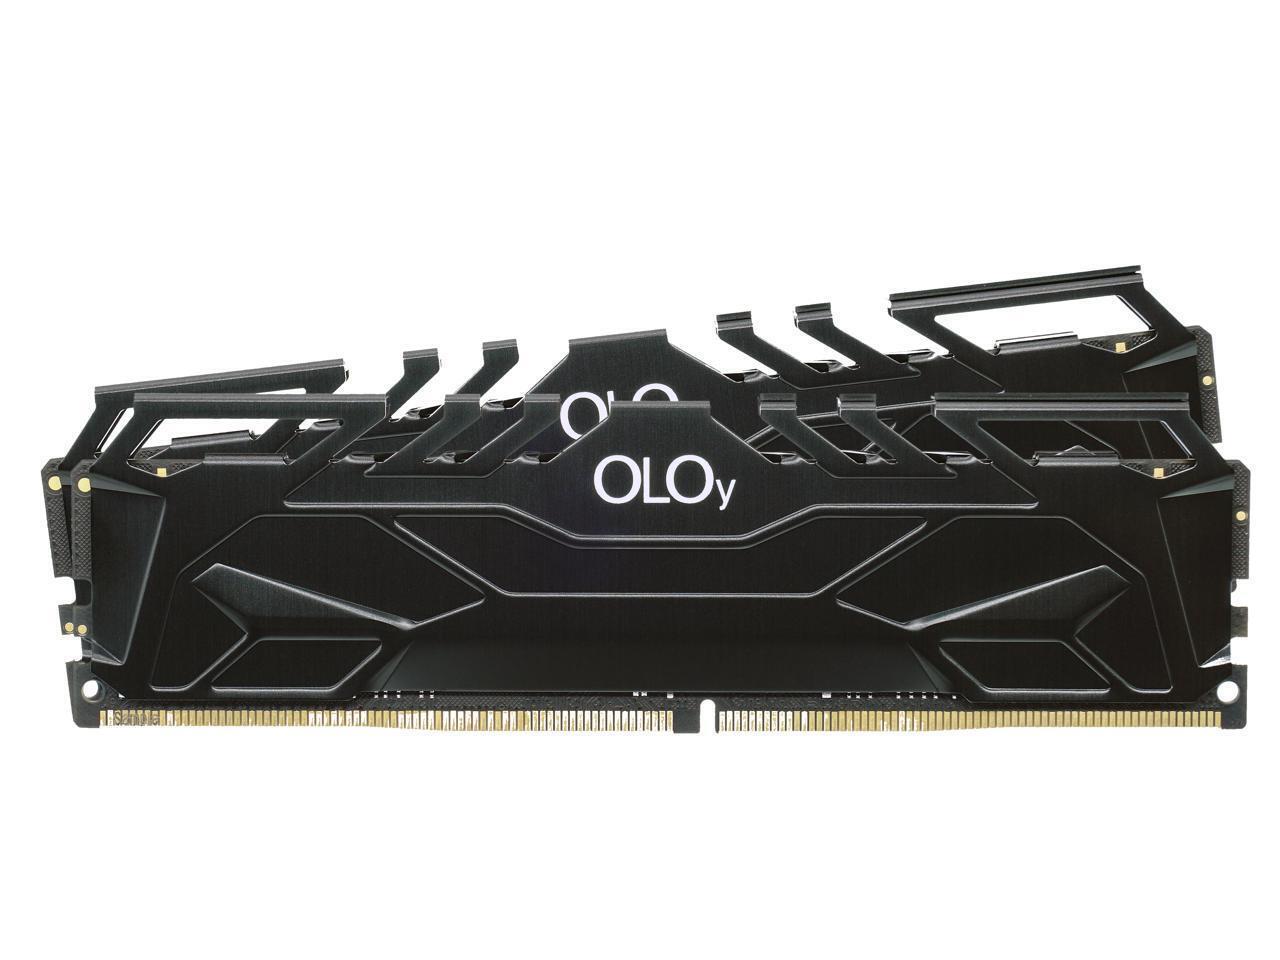 OLOy OWL 32GB (2 x 16GB) DDR4 3200 (PC4 25600) Desktop Memory Model